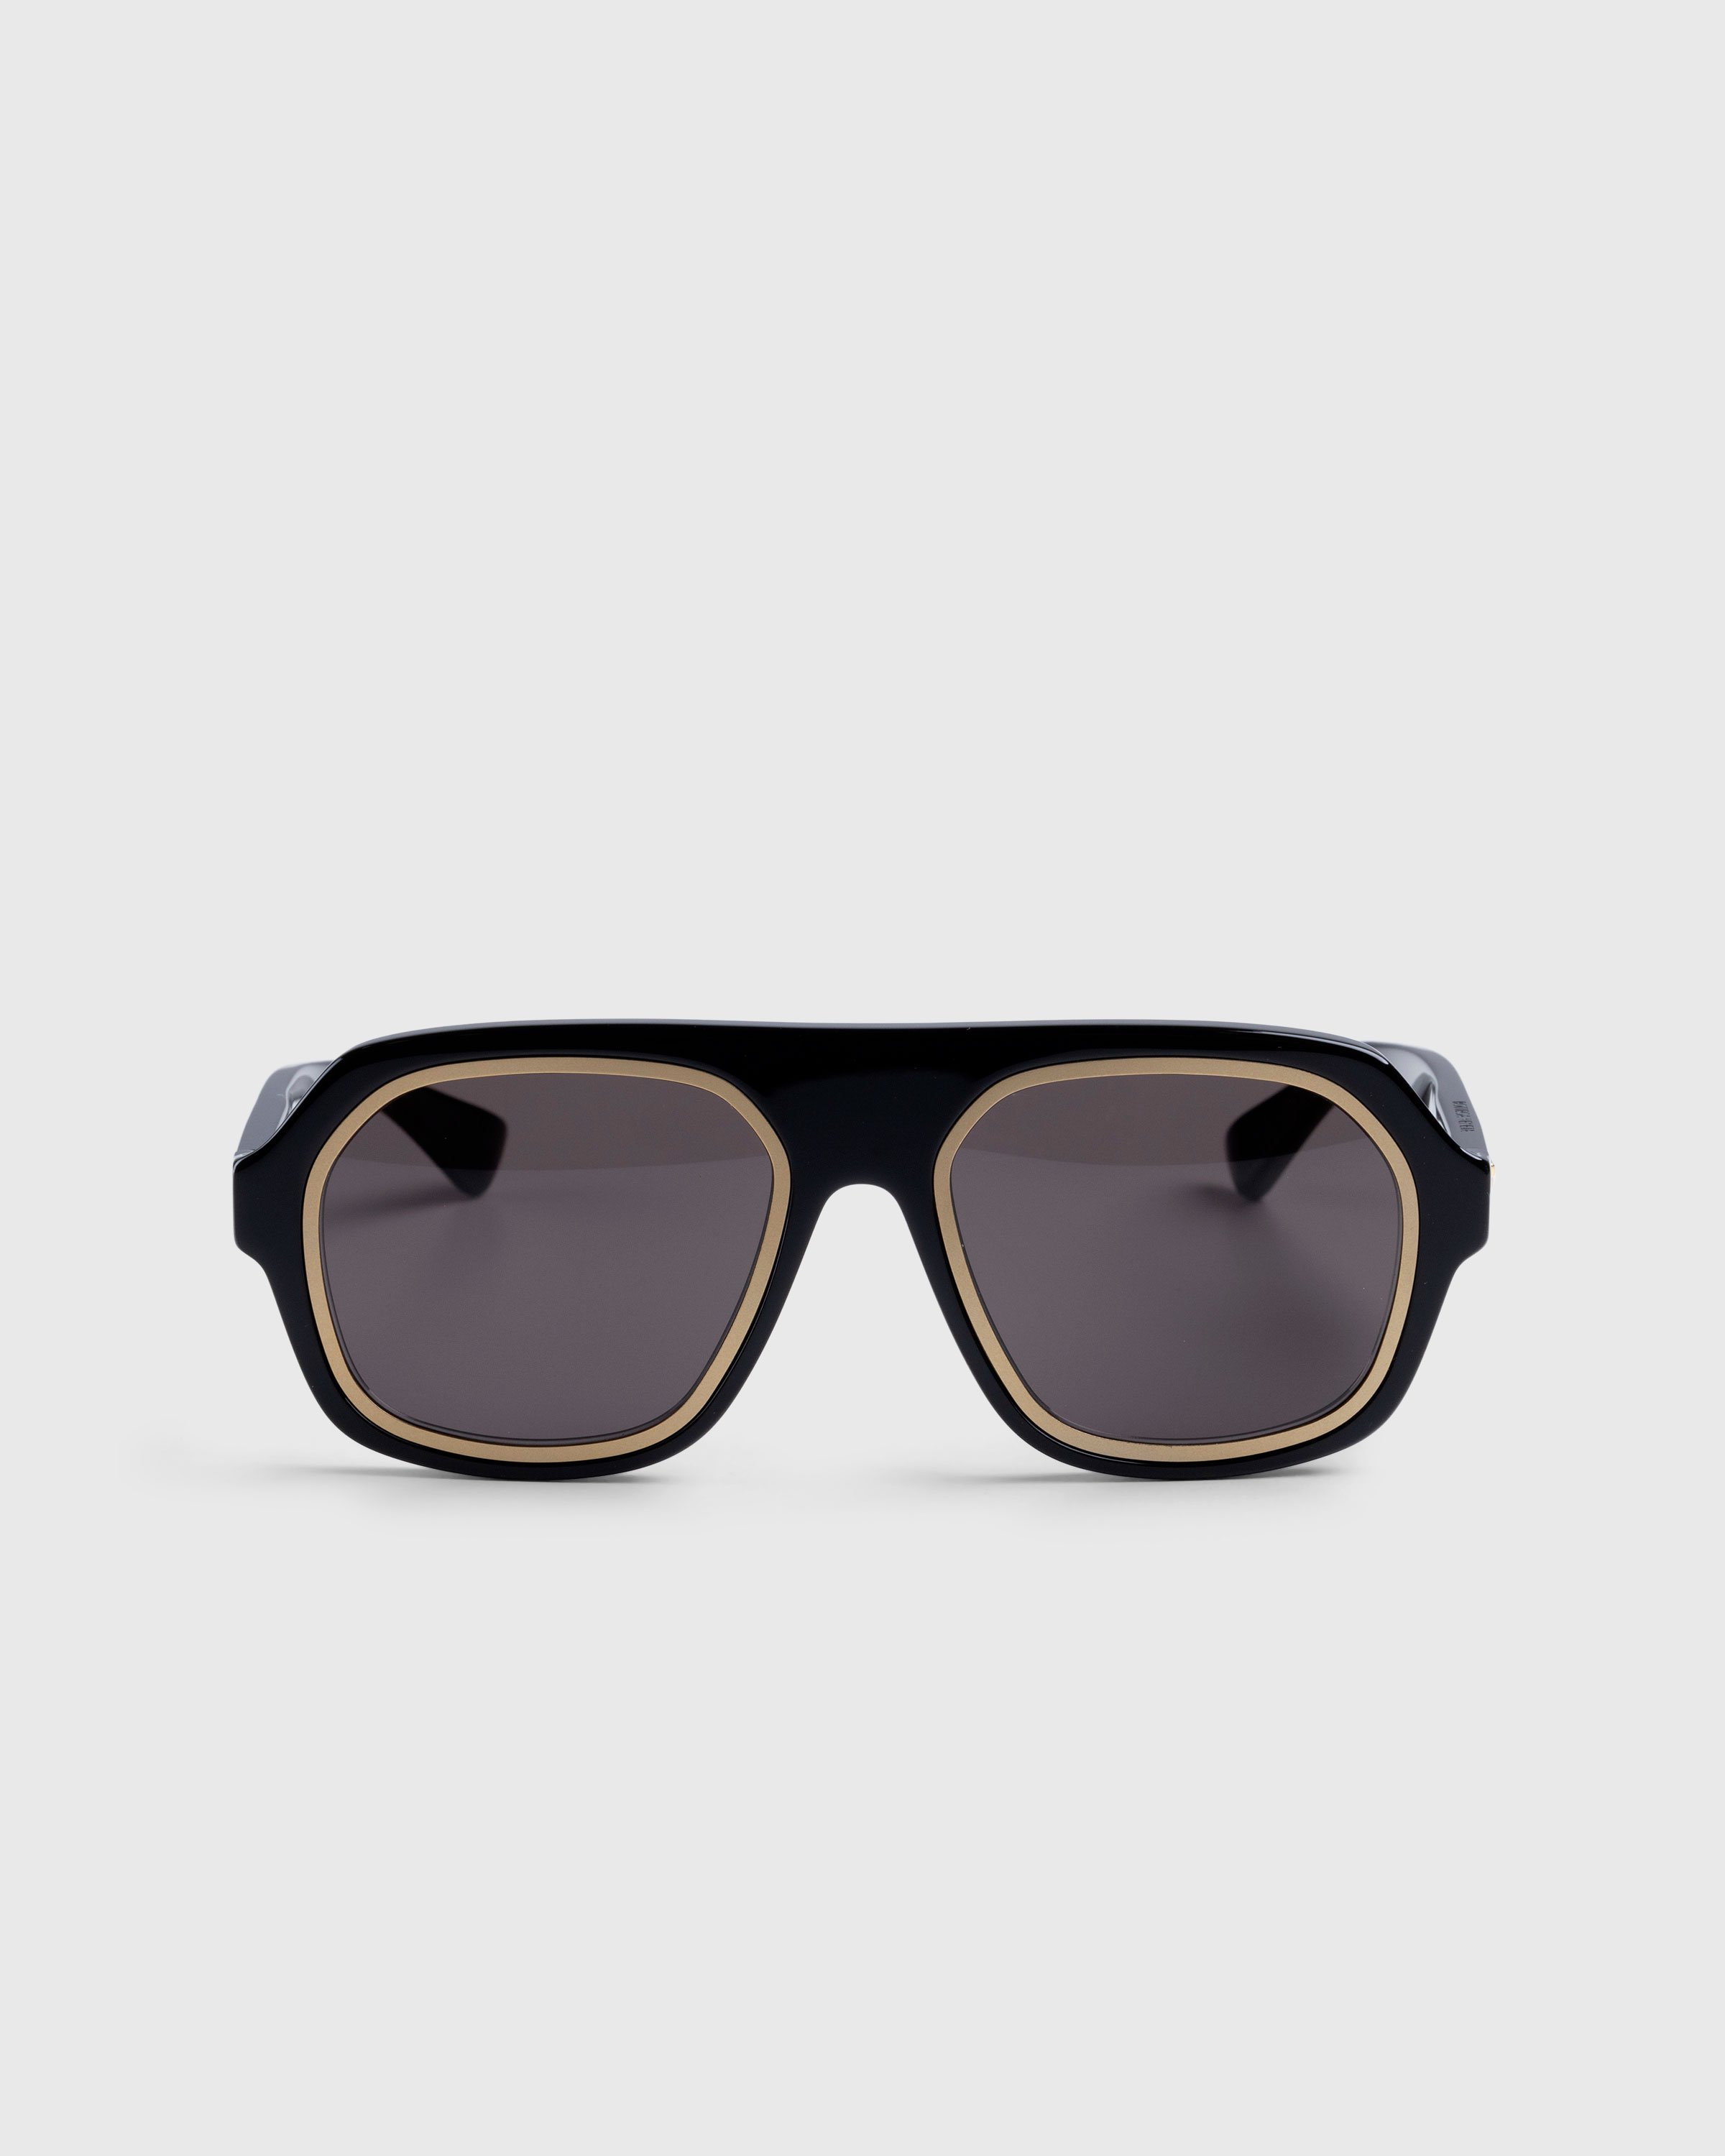 Bottega Veneta - Rim Aviator Sunglasses Black - Accessories - Black - Image 1